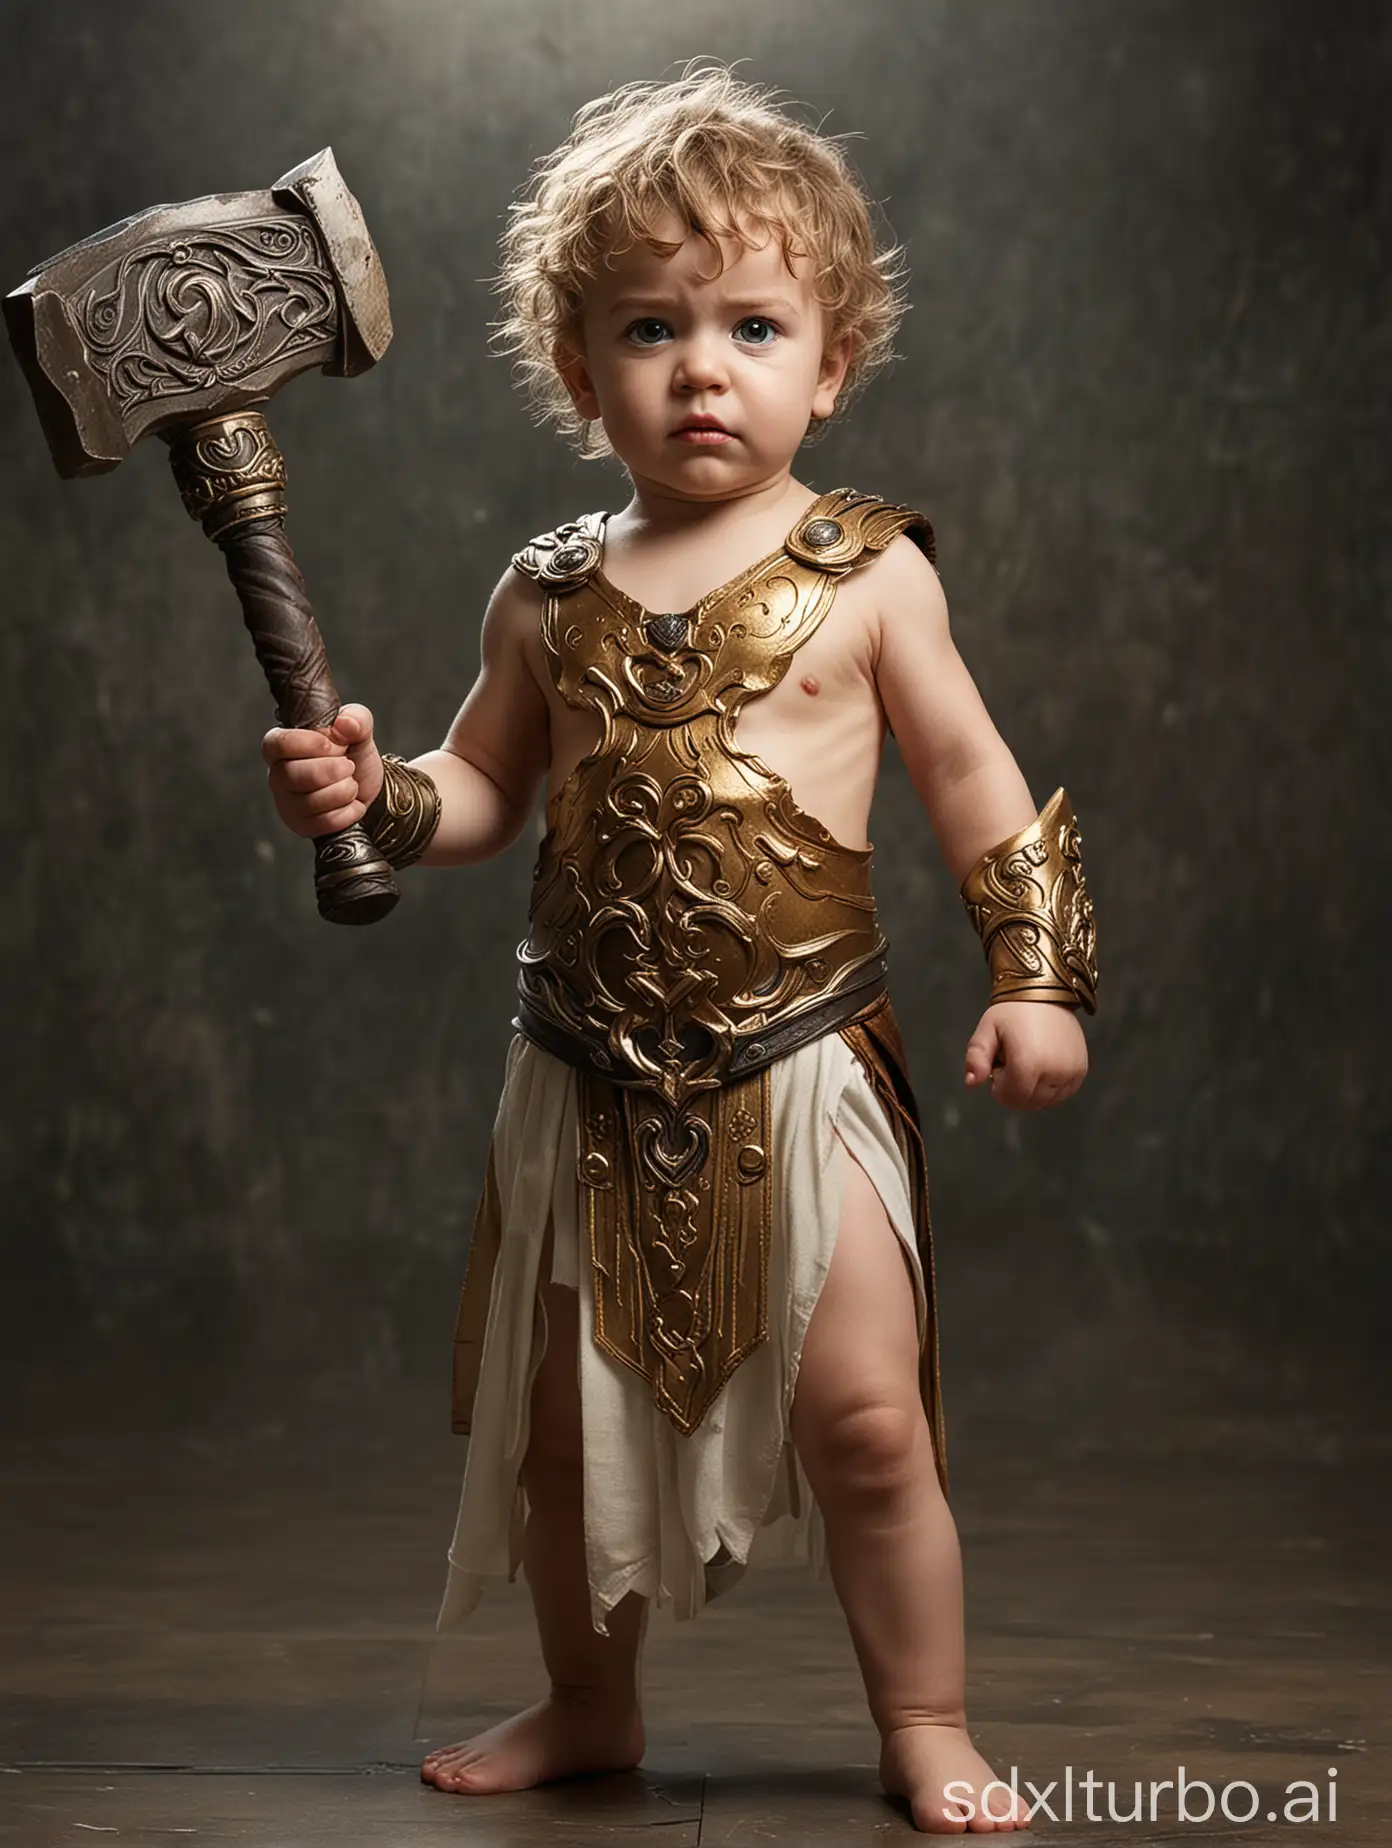 Boy-Dressed-as-Zeus-Holding-Hammer